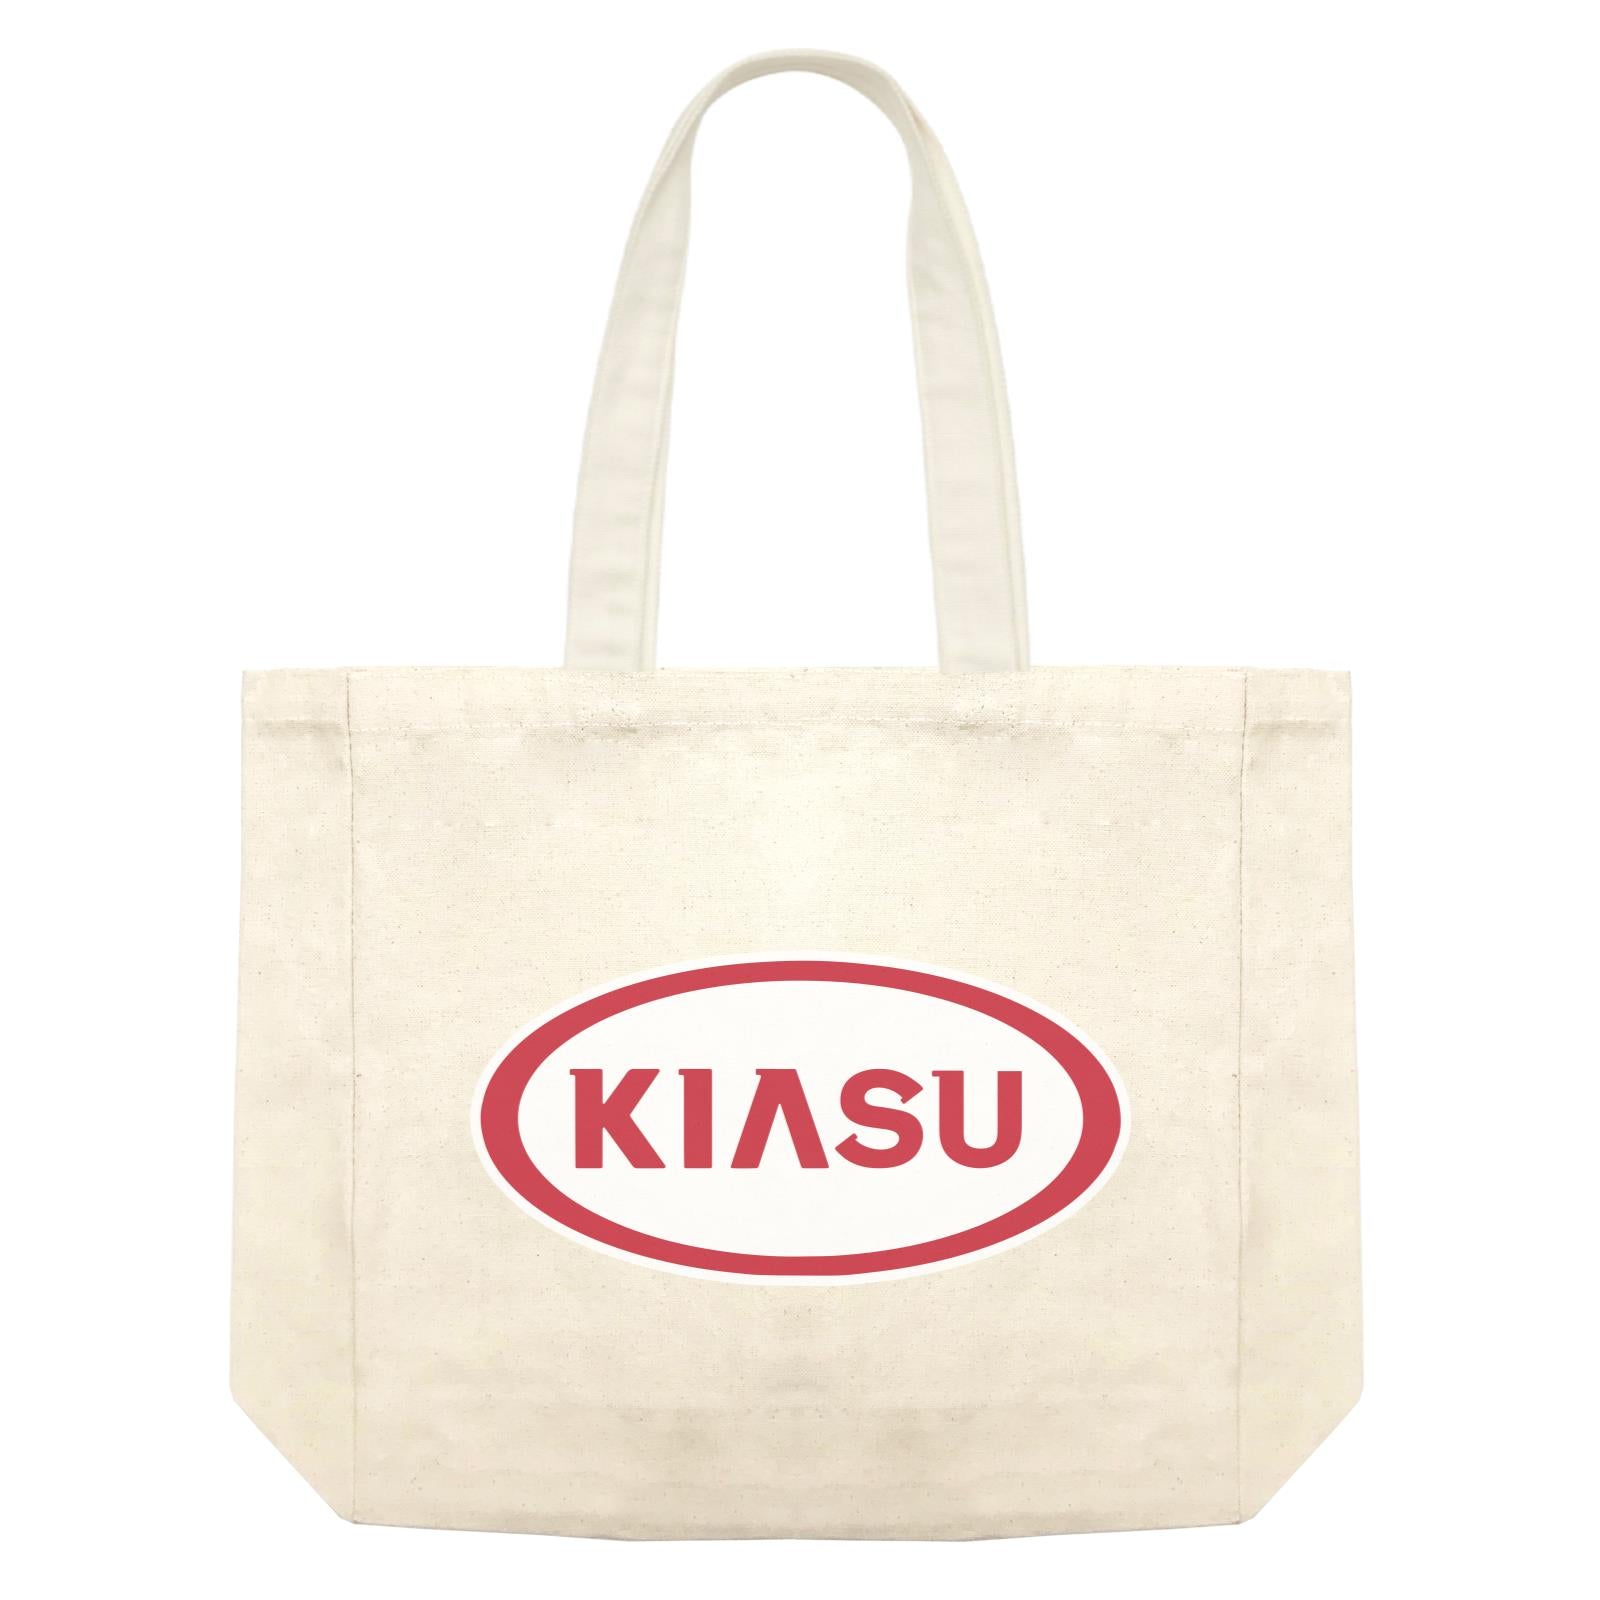 Slang Statement Kiasu Accessories Shopping Bag